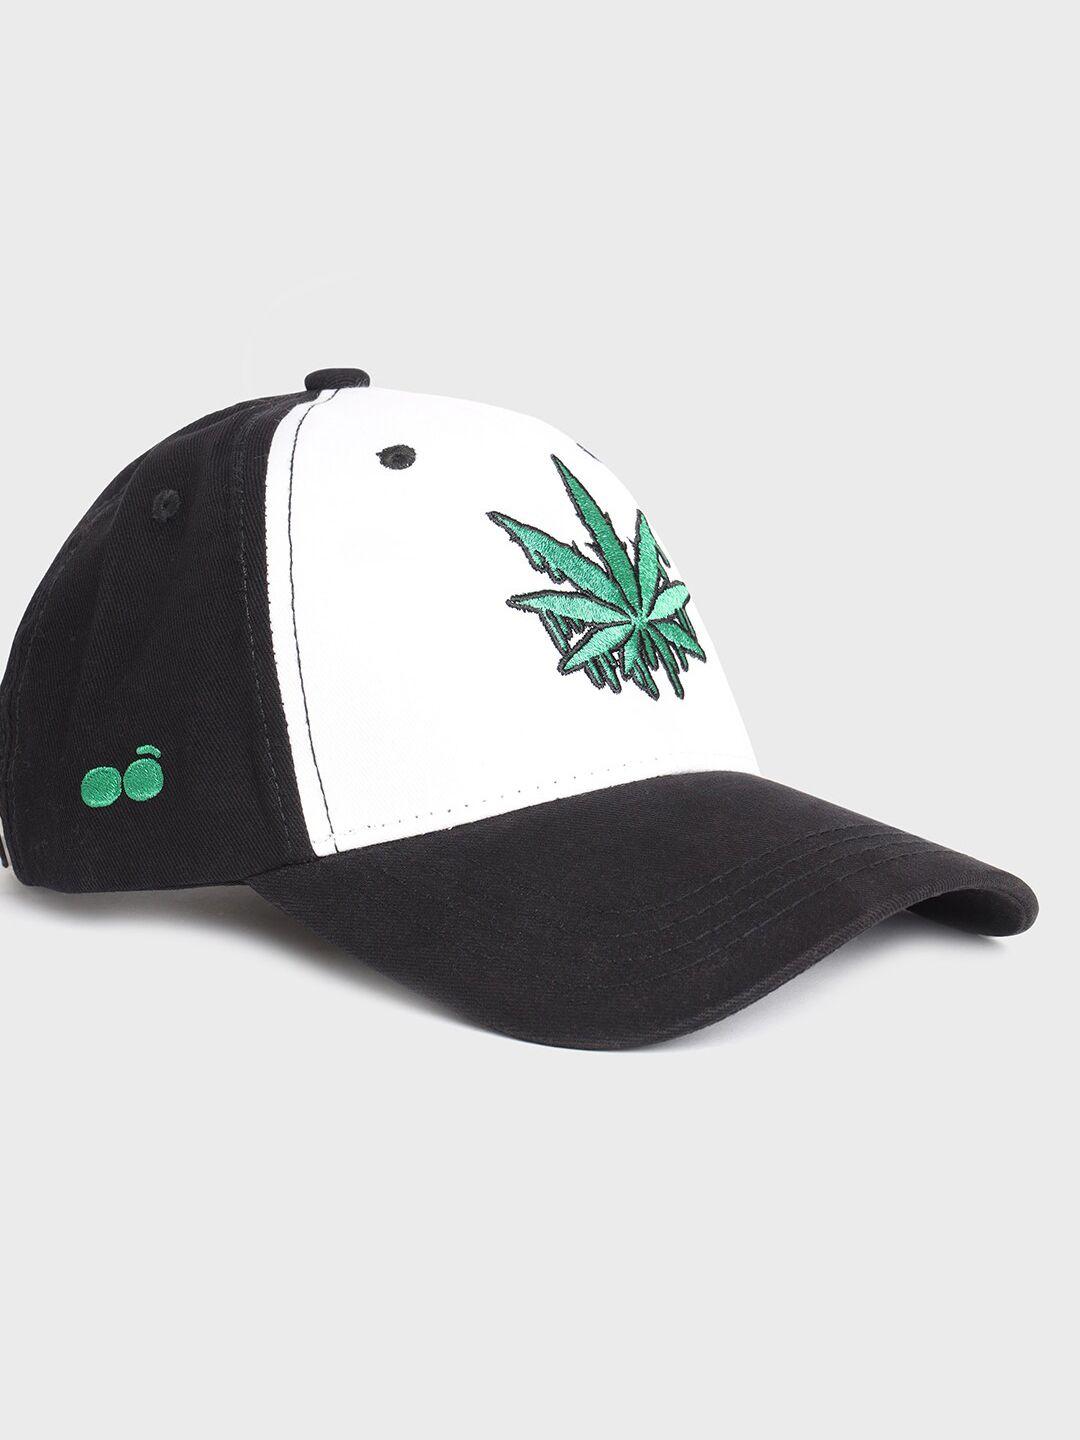 bewakoof adult black & white leaf colourblocked baseball cap